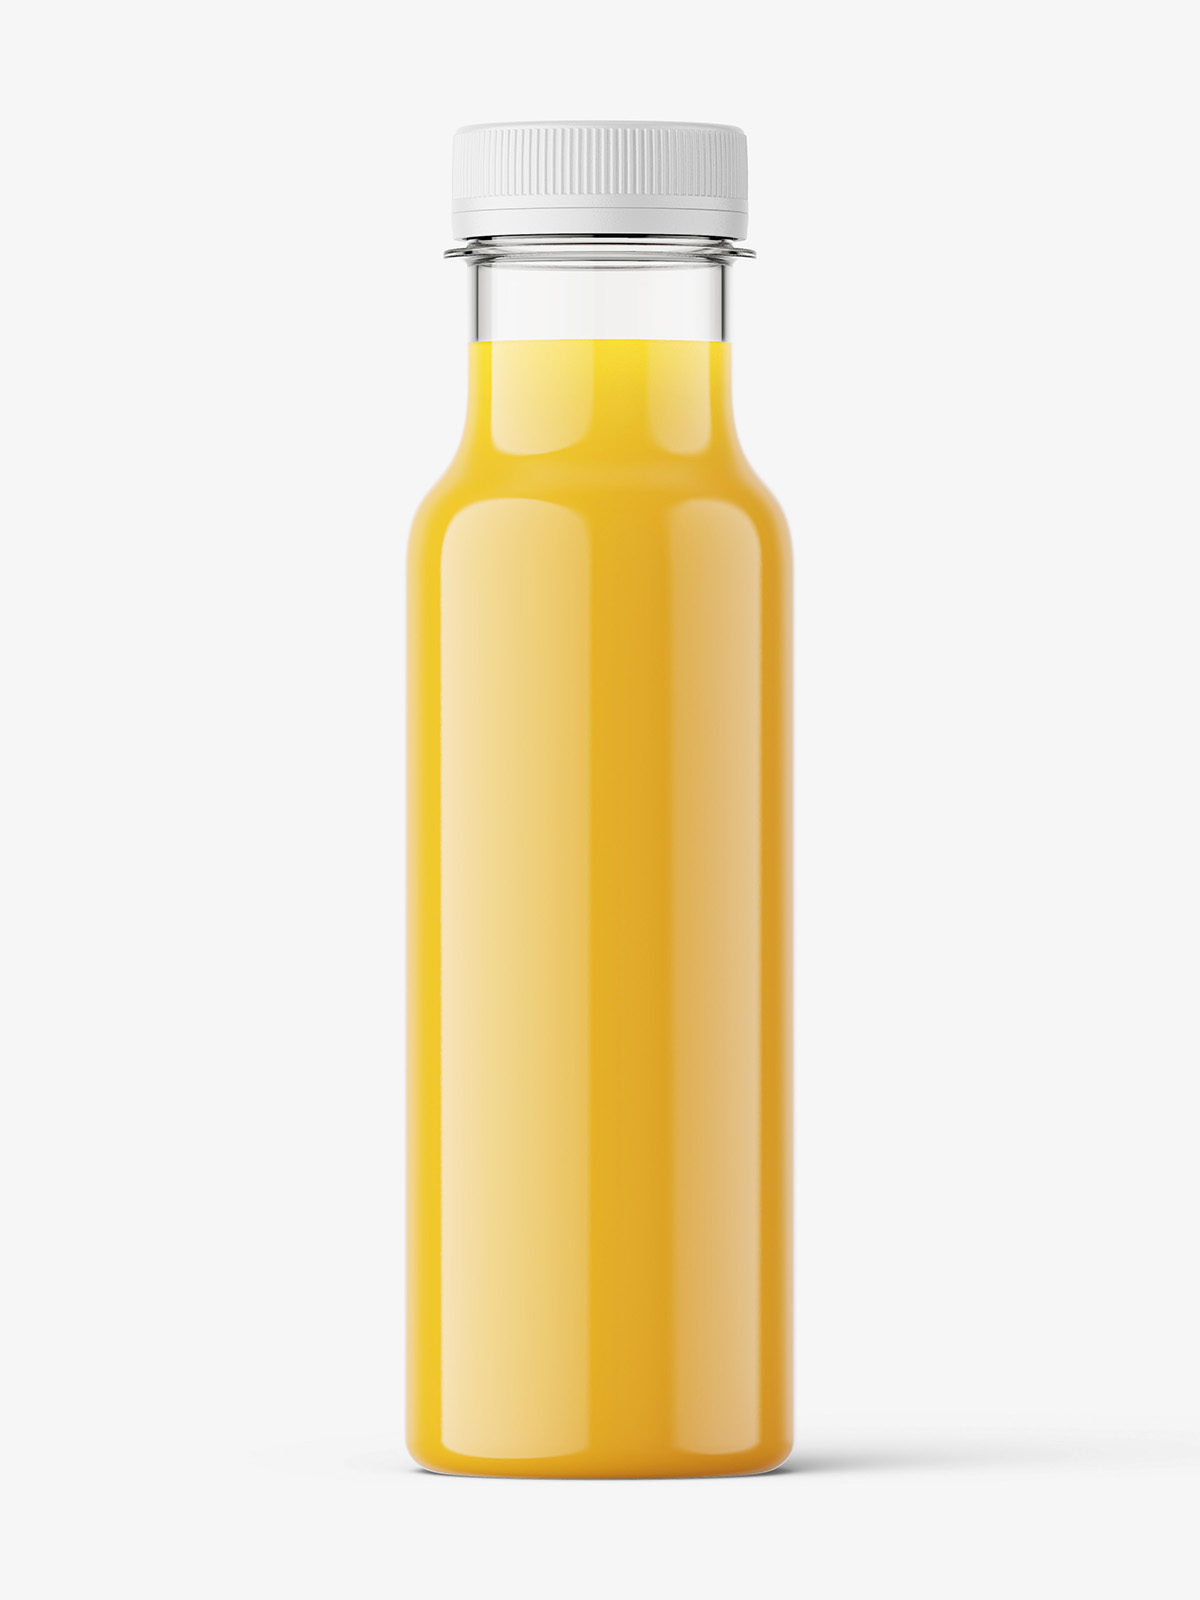 https://smartymockups.com/wp-content/uploads/2019/05/Orange_Juice_Bottle_Mockup_1ok1.jpg